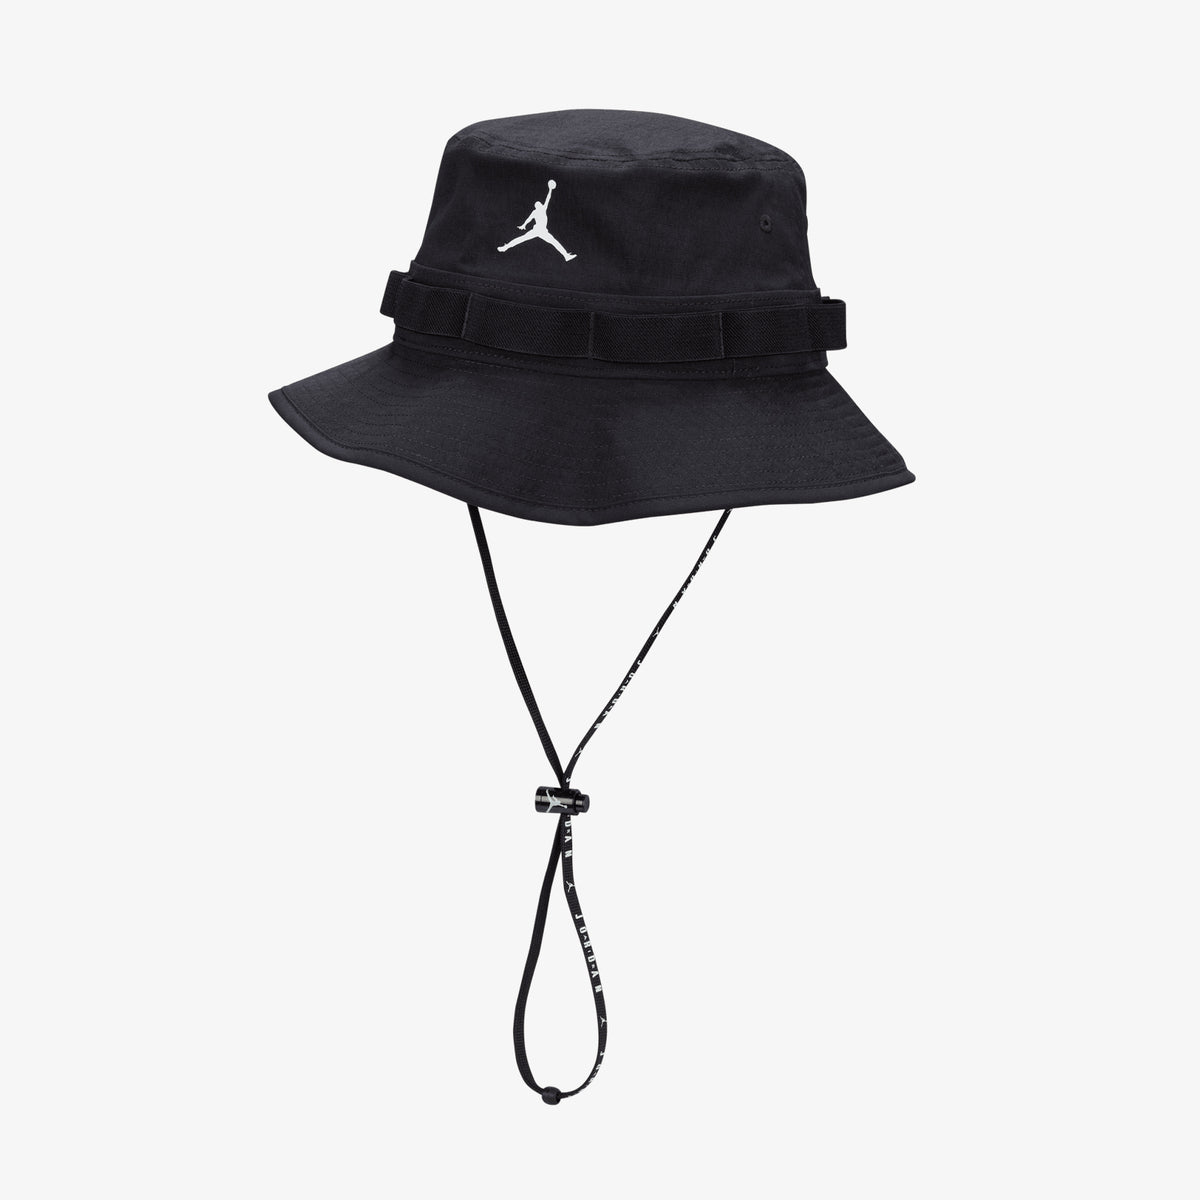 Jordan Apex Bucket Hat - Black